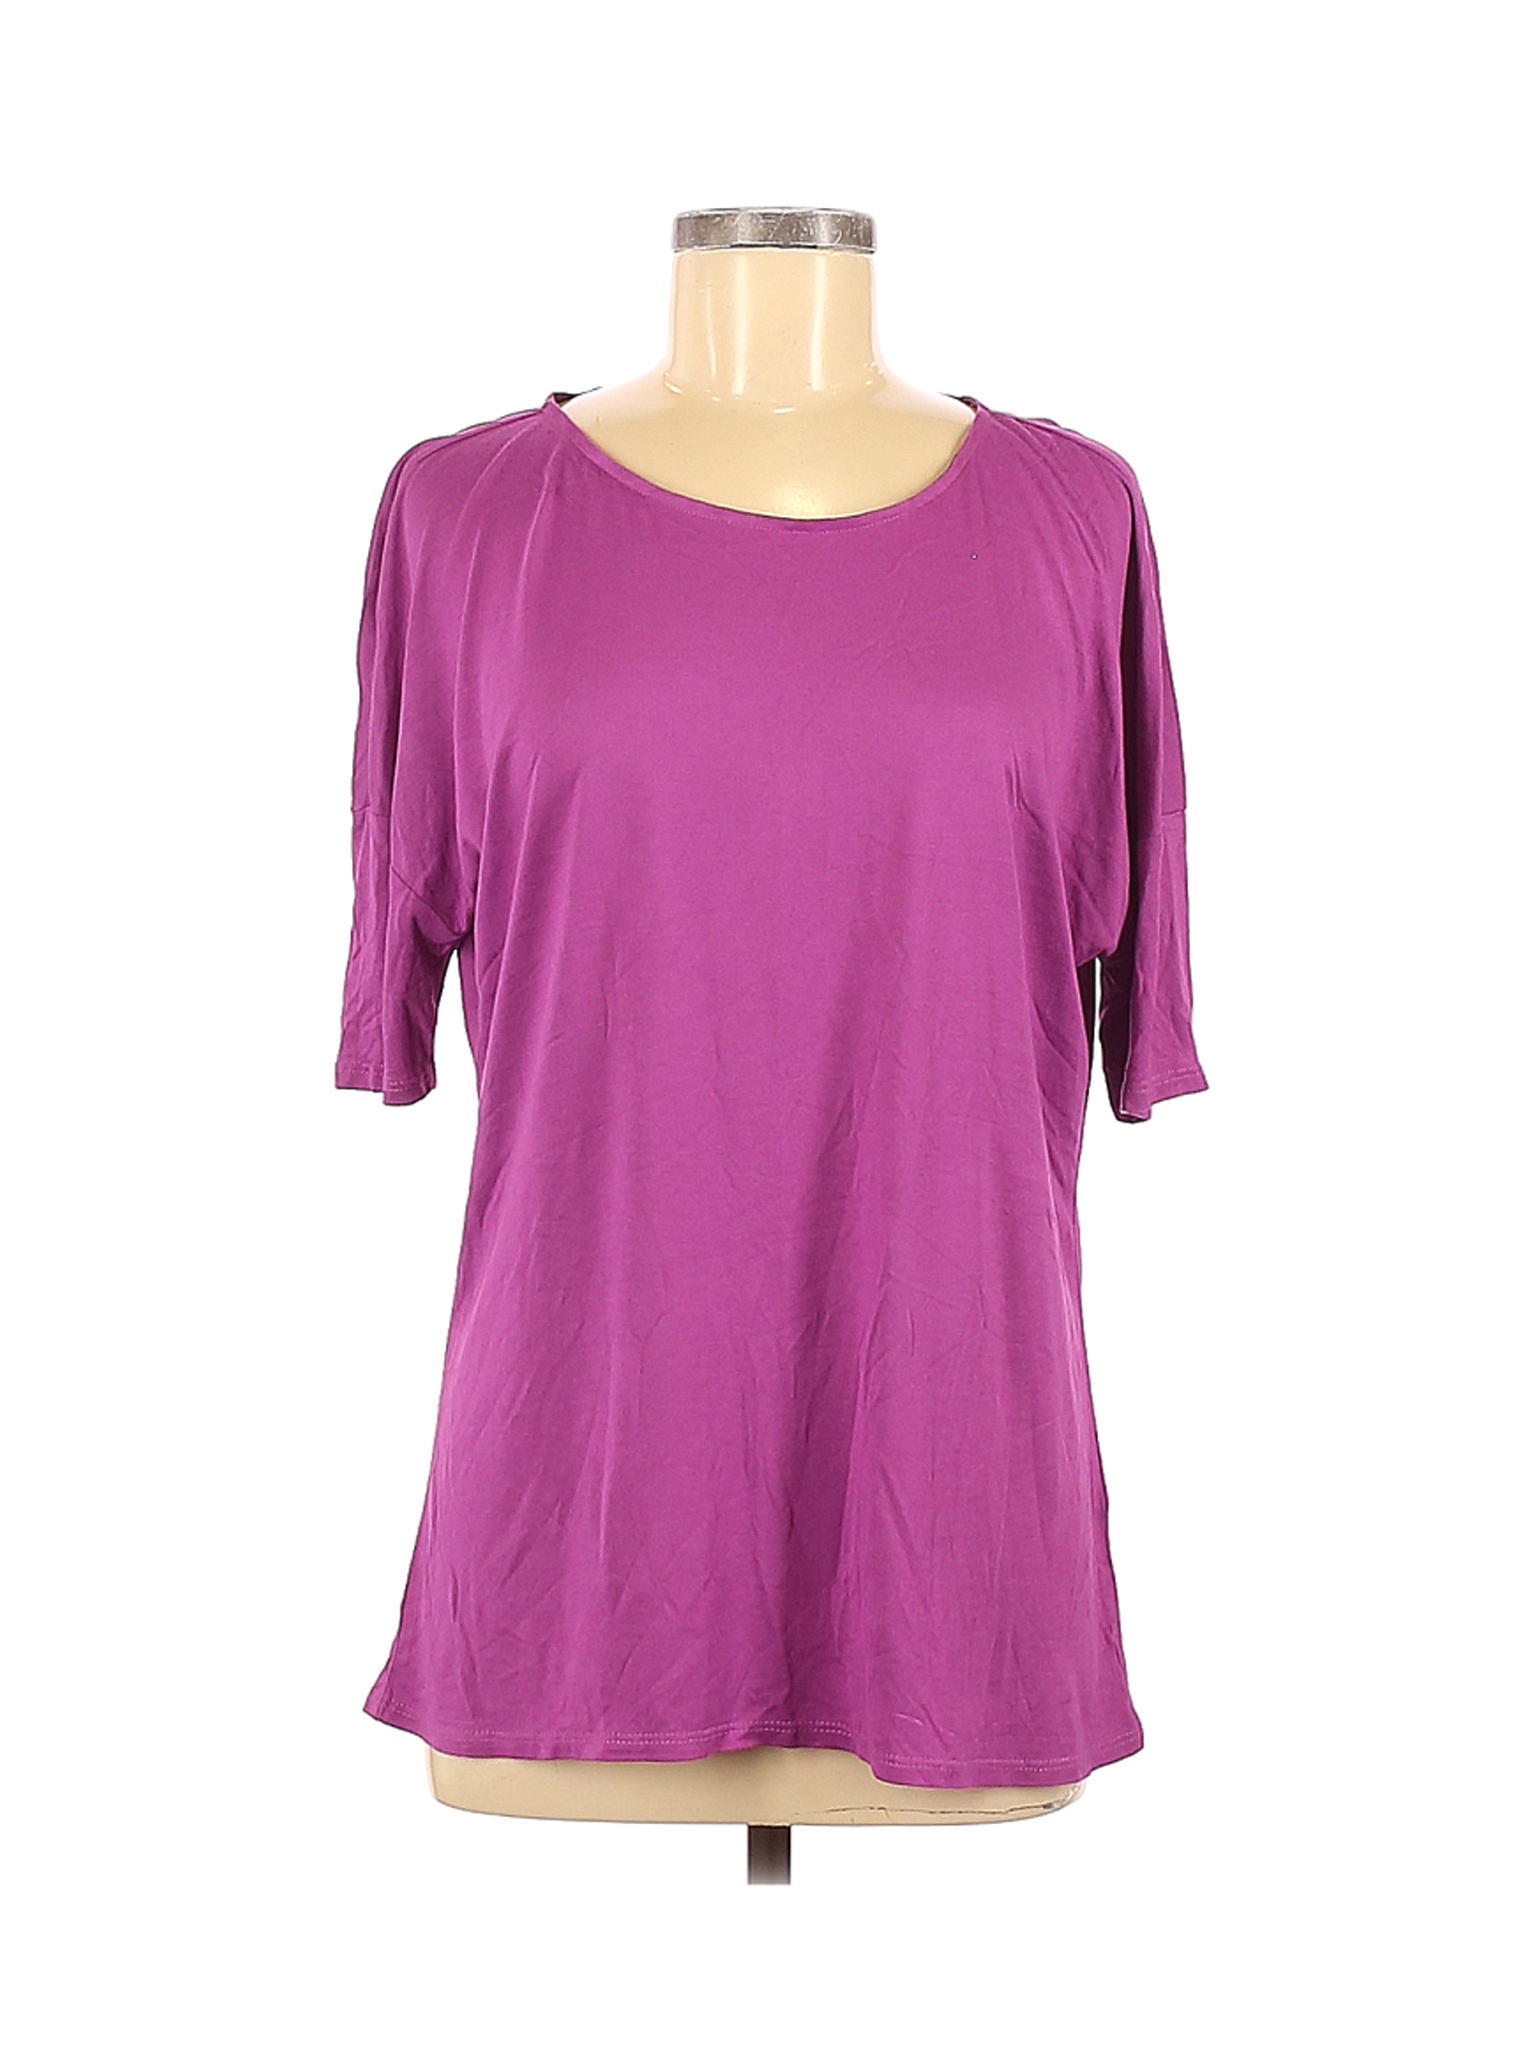 Philosophy Republic Clothing Women Purple Short Sleeve T-Shirt L | eBay